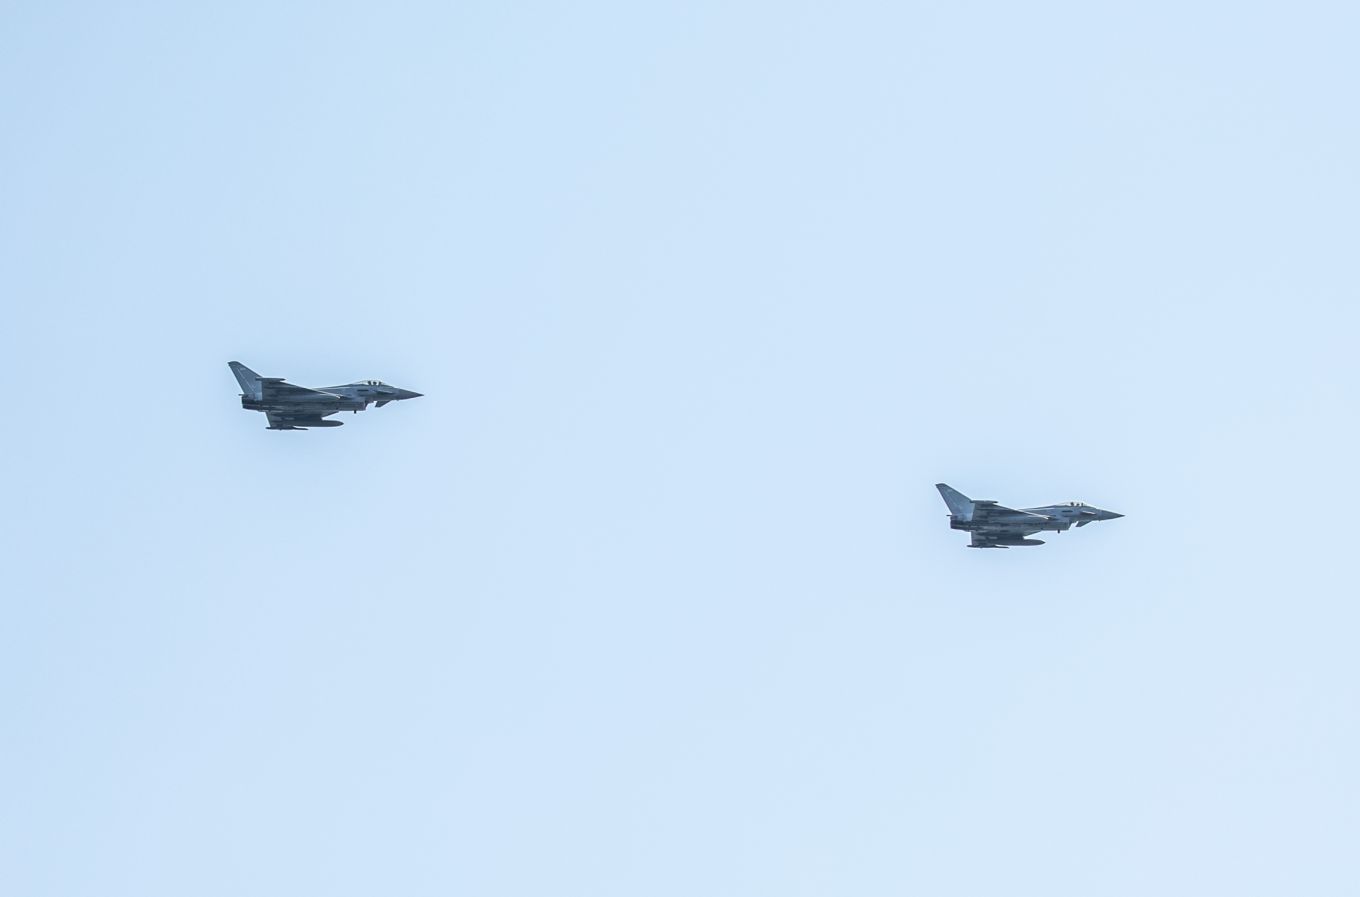 Two Typhoons in flight.